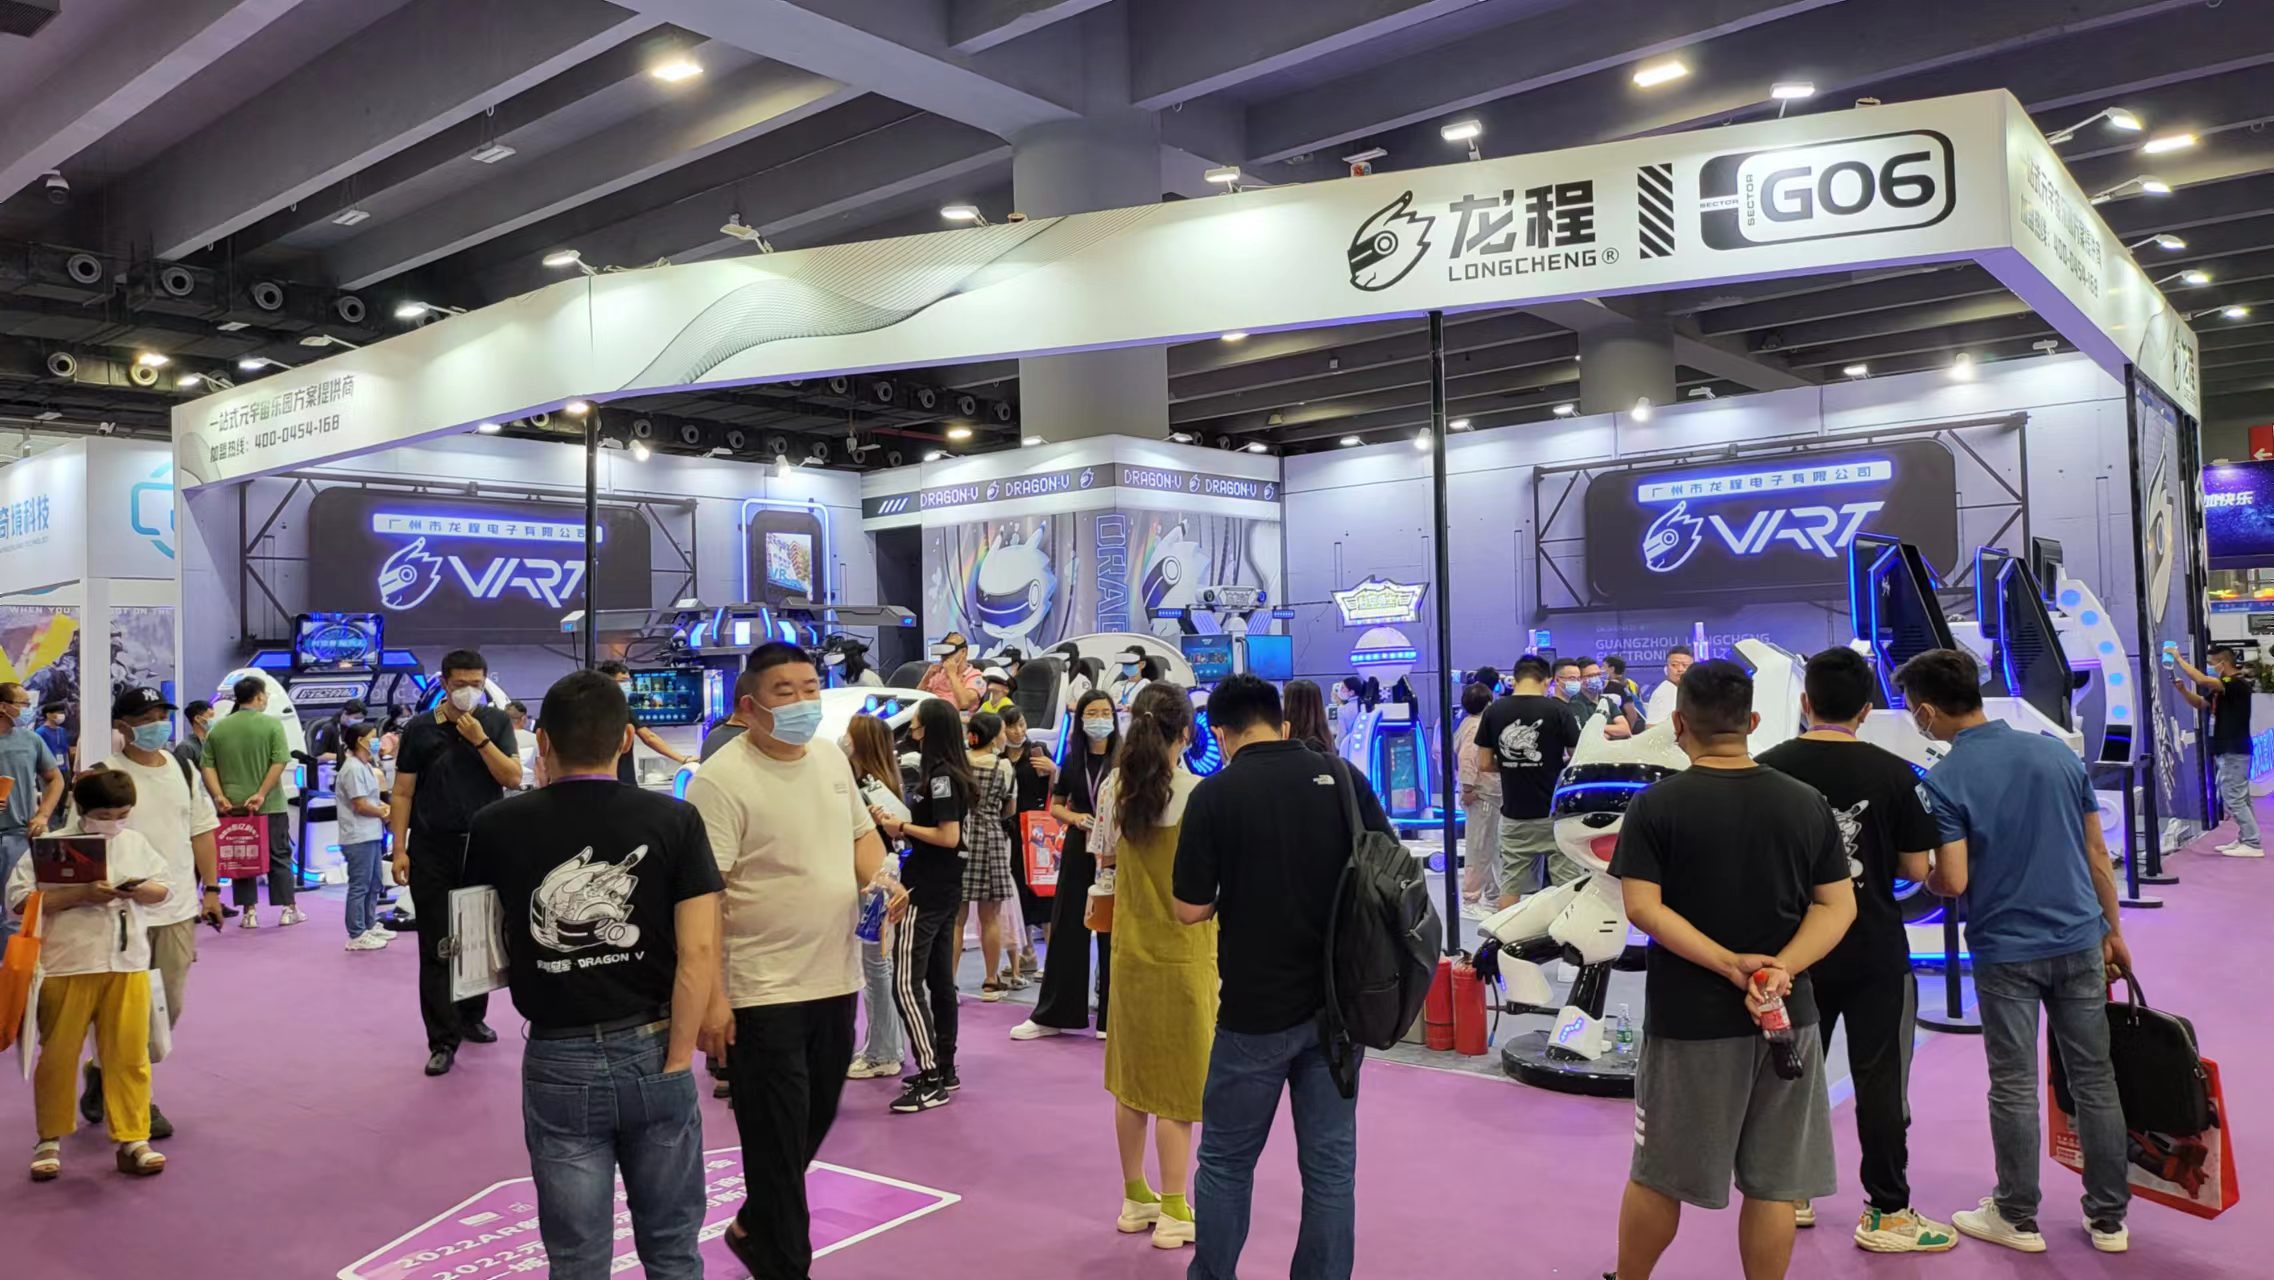 Vart VR |Ang Guangzhou Metaverse Exhibition Booth G06 Talagsaon nga Popular